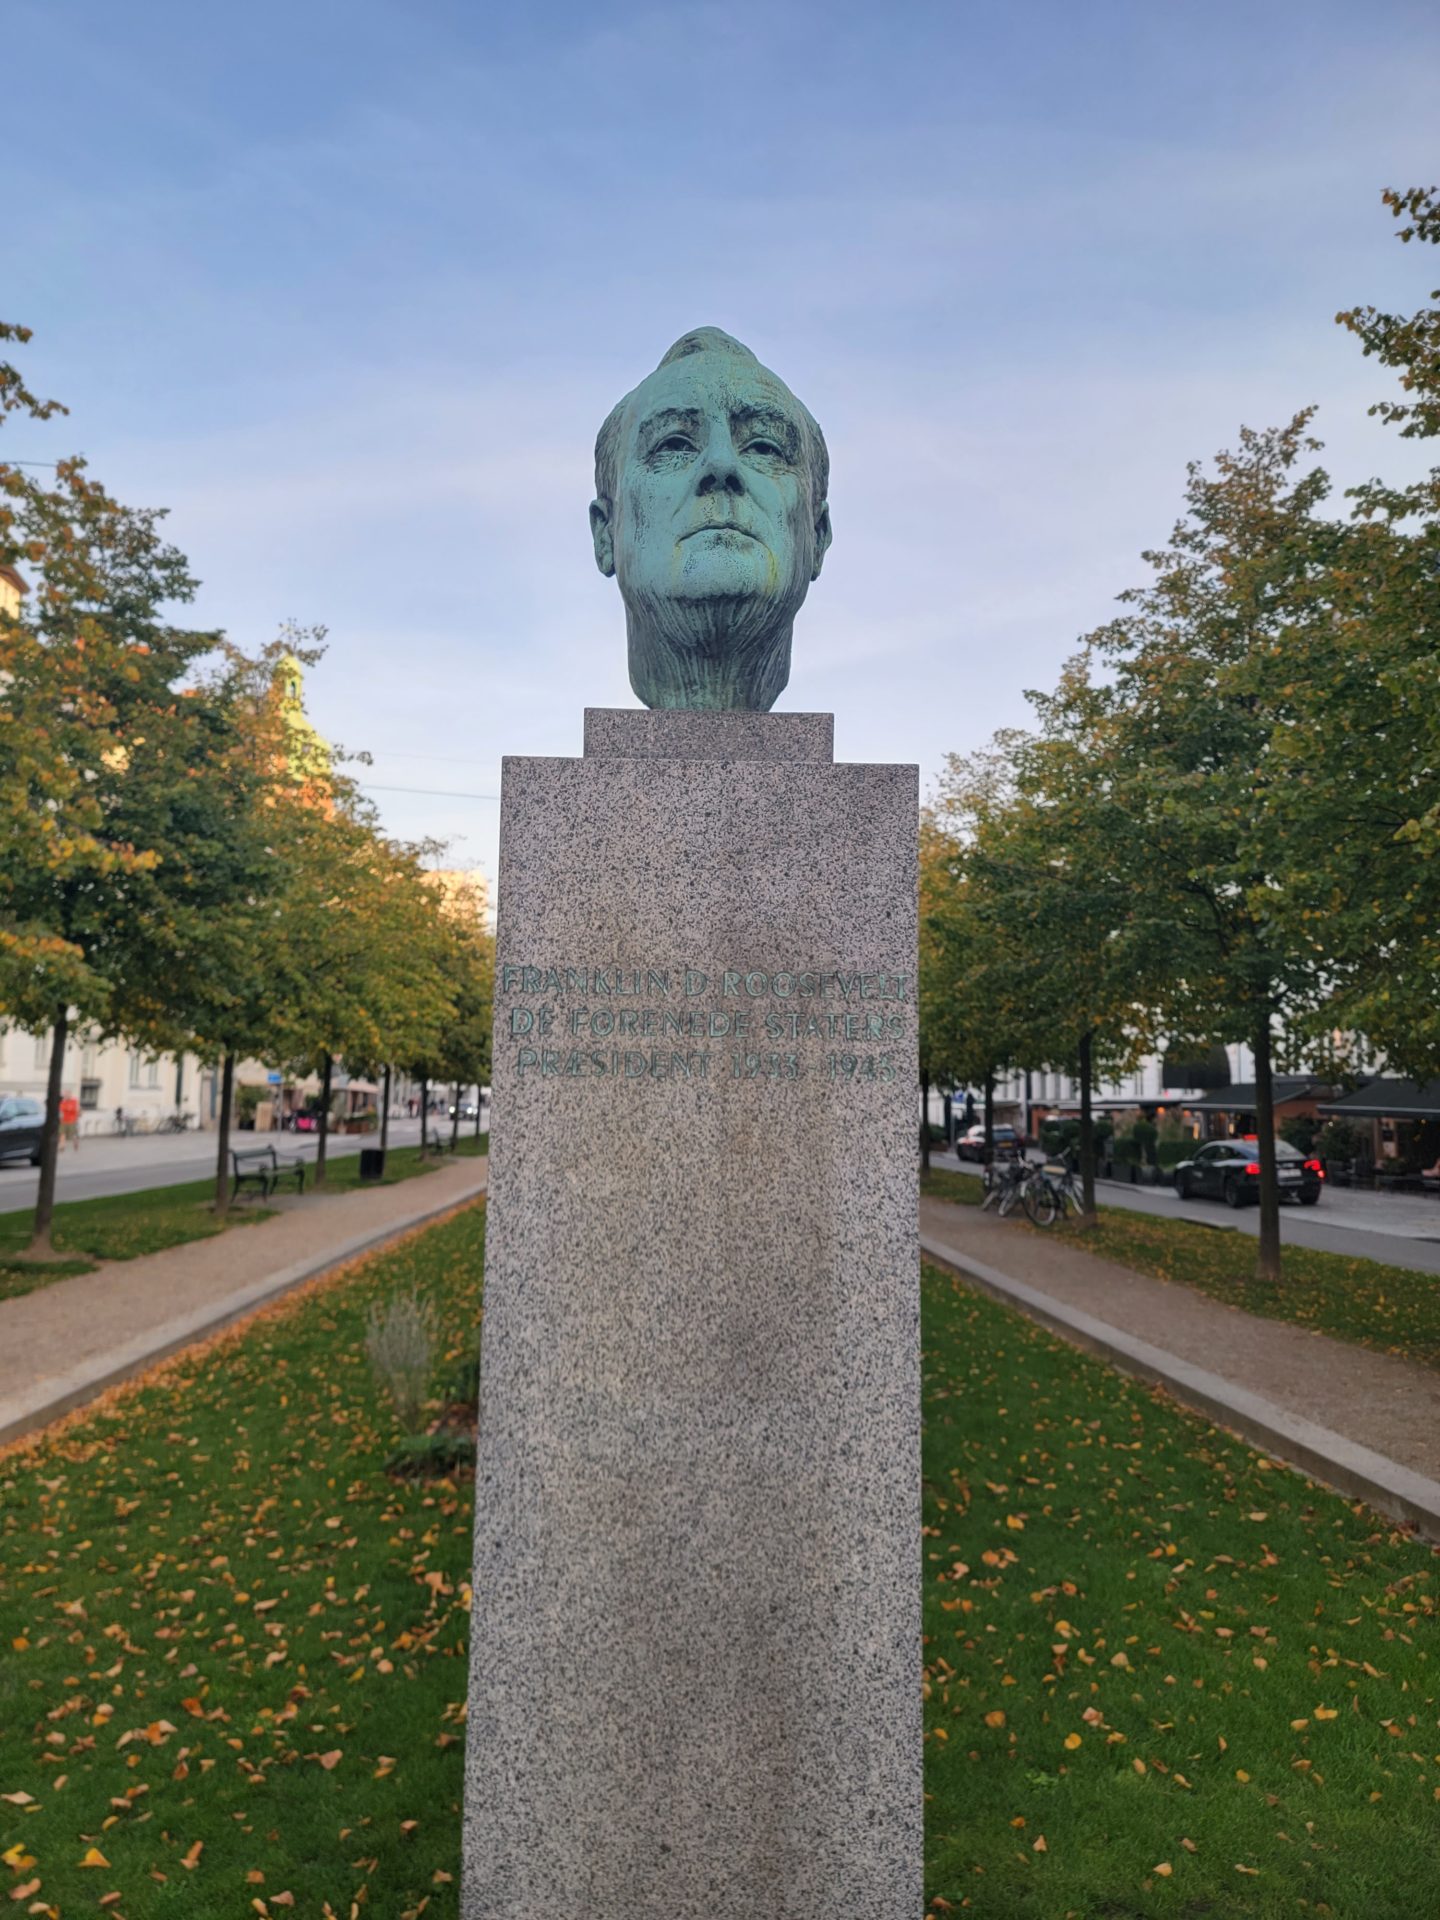 a statue of a man's head on a stone pedestal